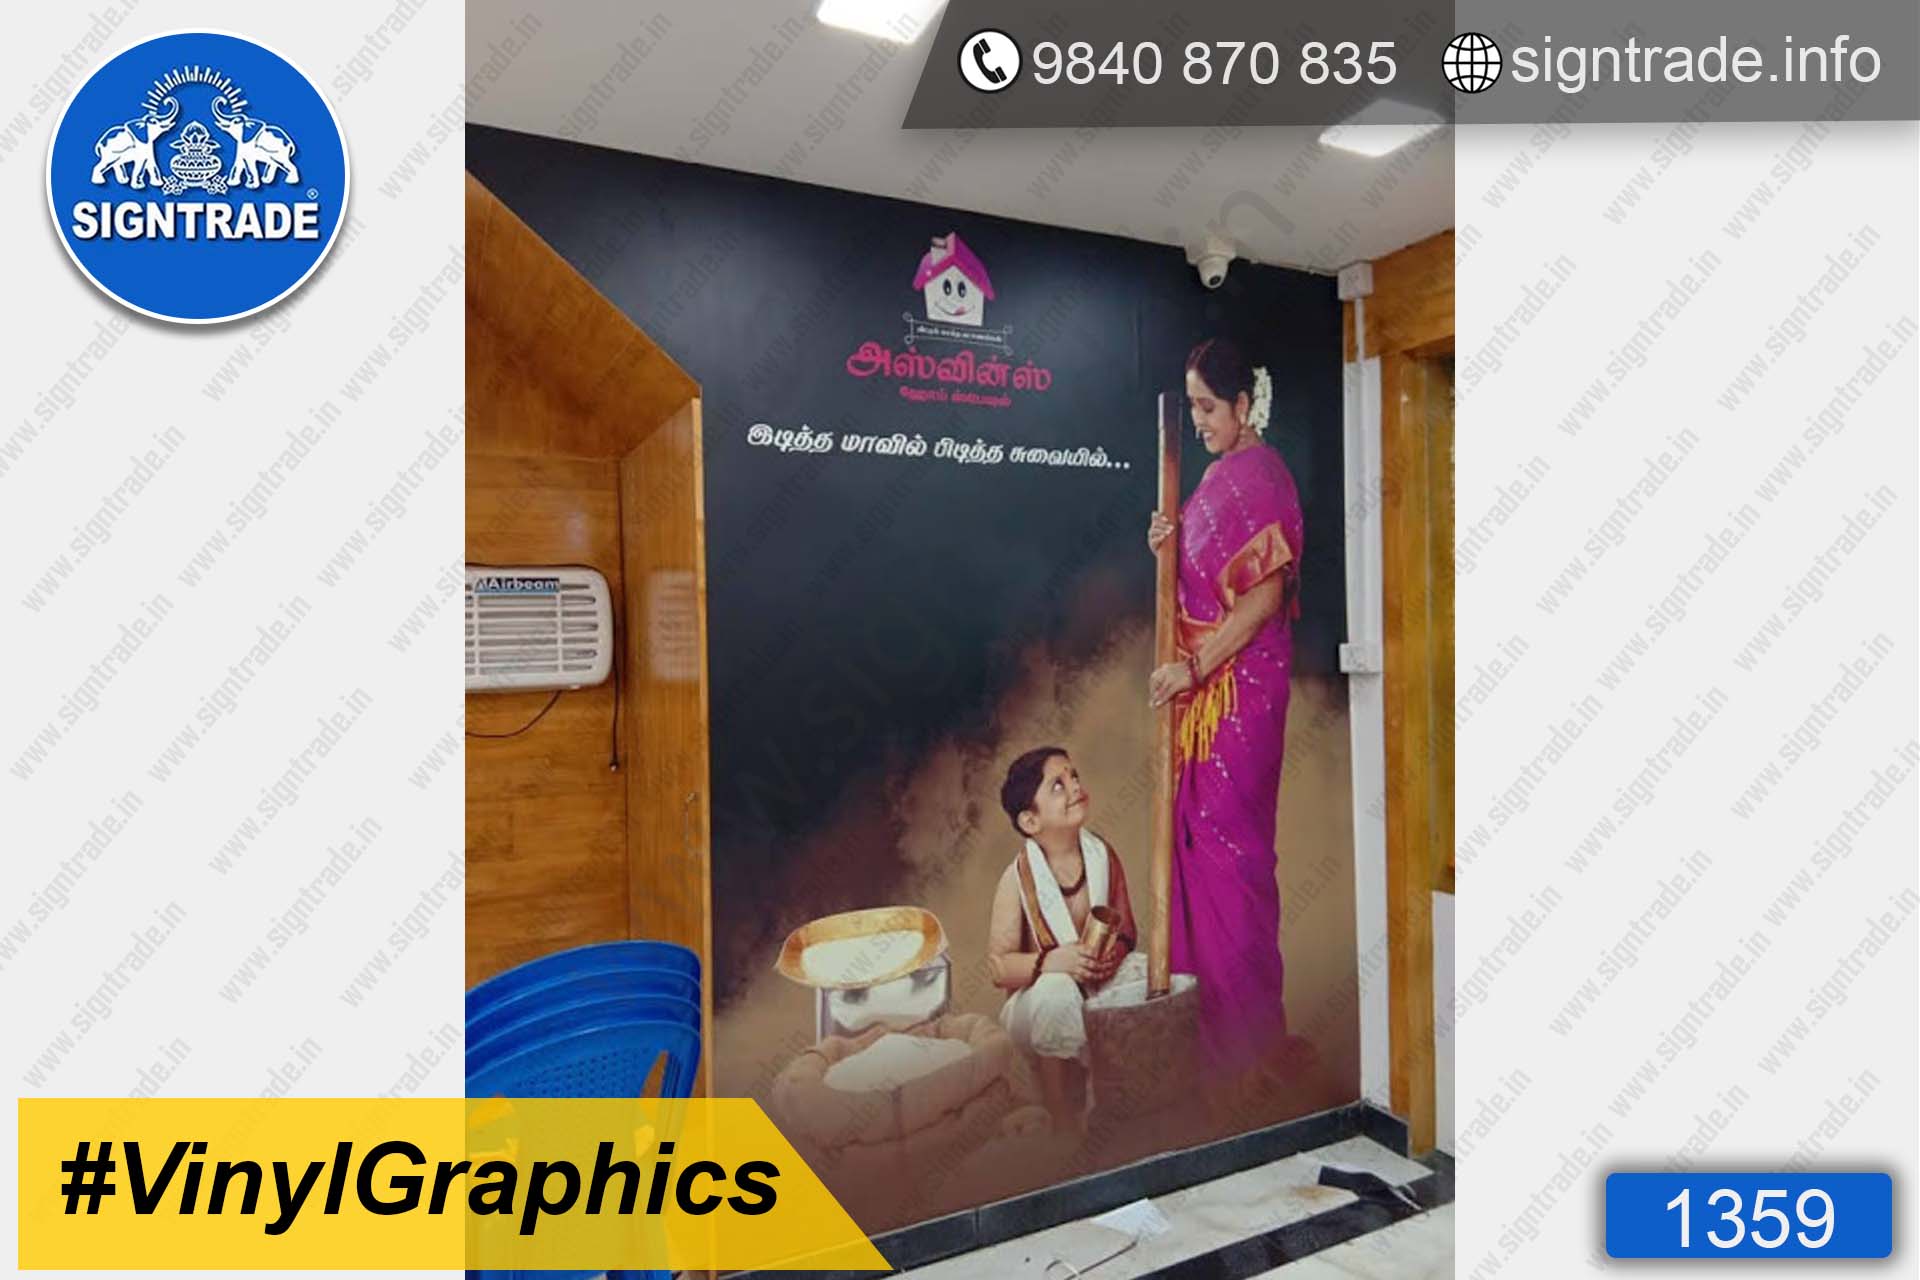 Aswin Sweets and Snacks - Chennai - Vinyl Graphics - SIGNTRADE - Custom Printed Wall Graphics in Chennai